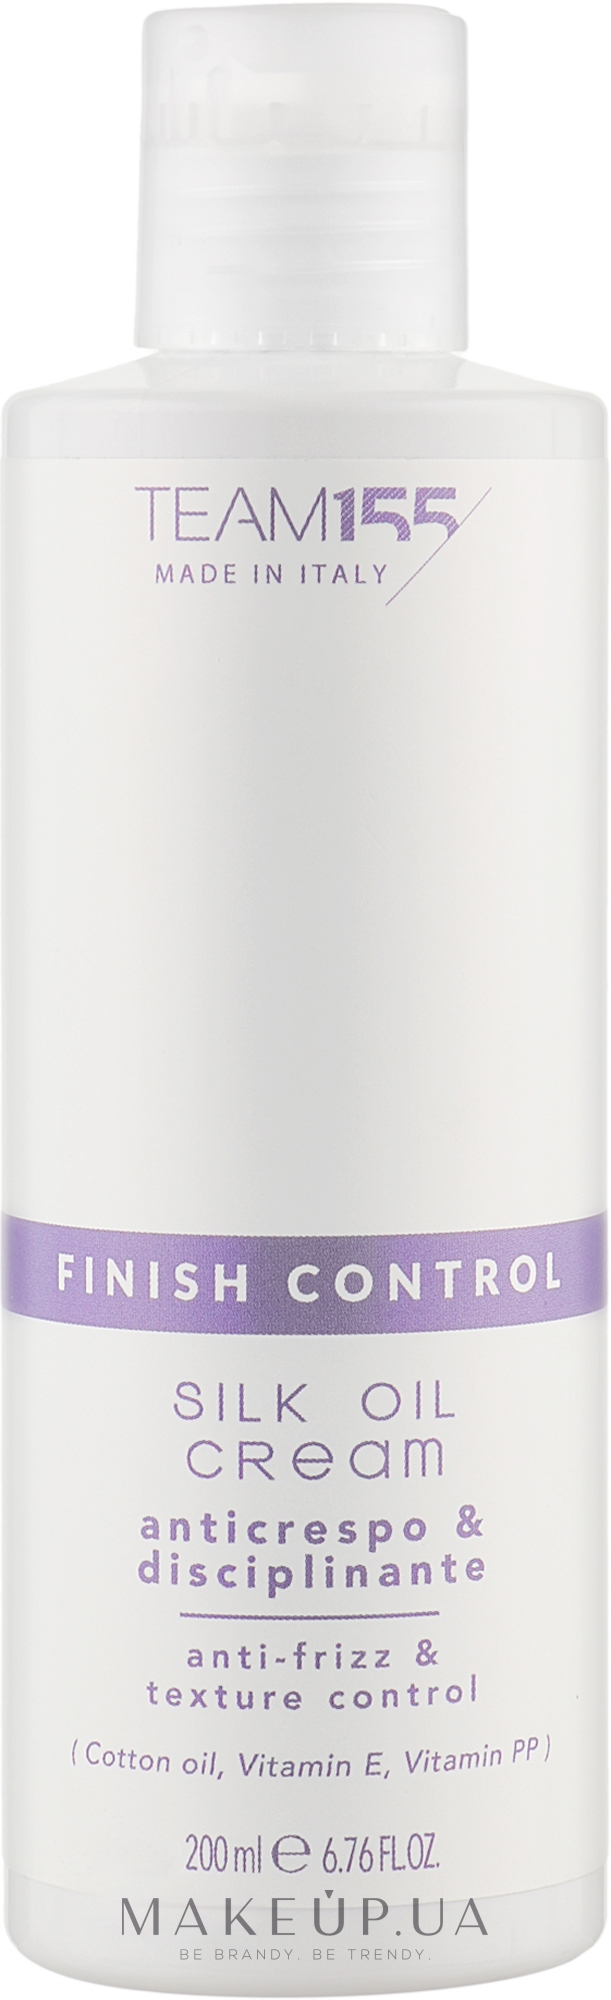 Крем-масло для волос - Team 155 Finish Control Silk Oil Cream — фото 200ml